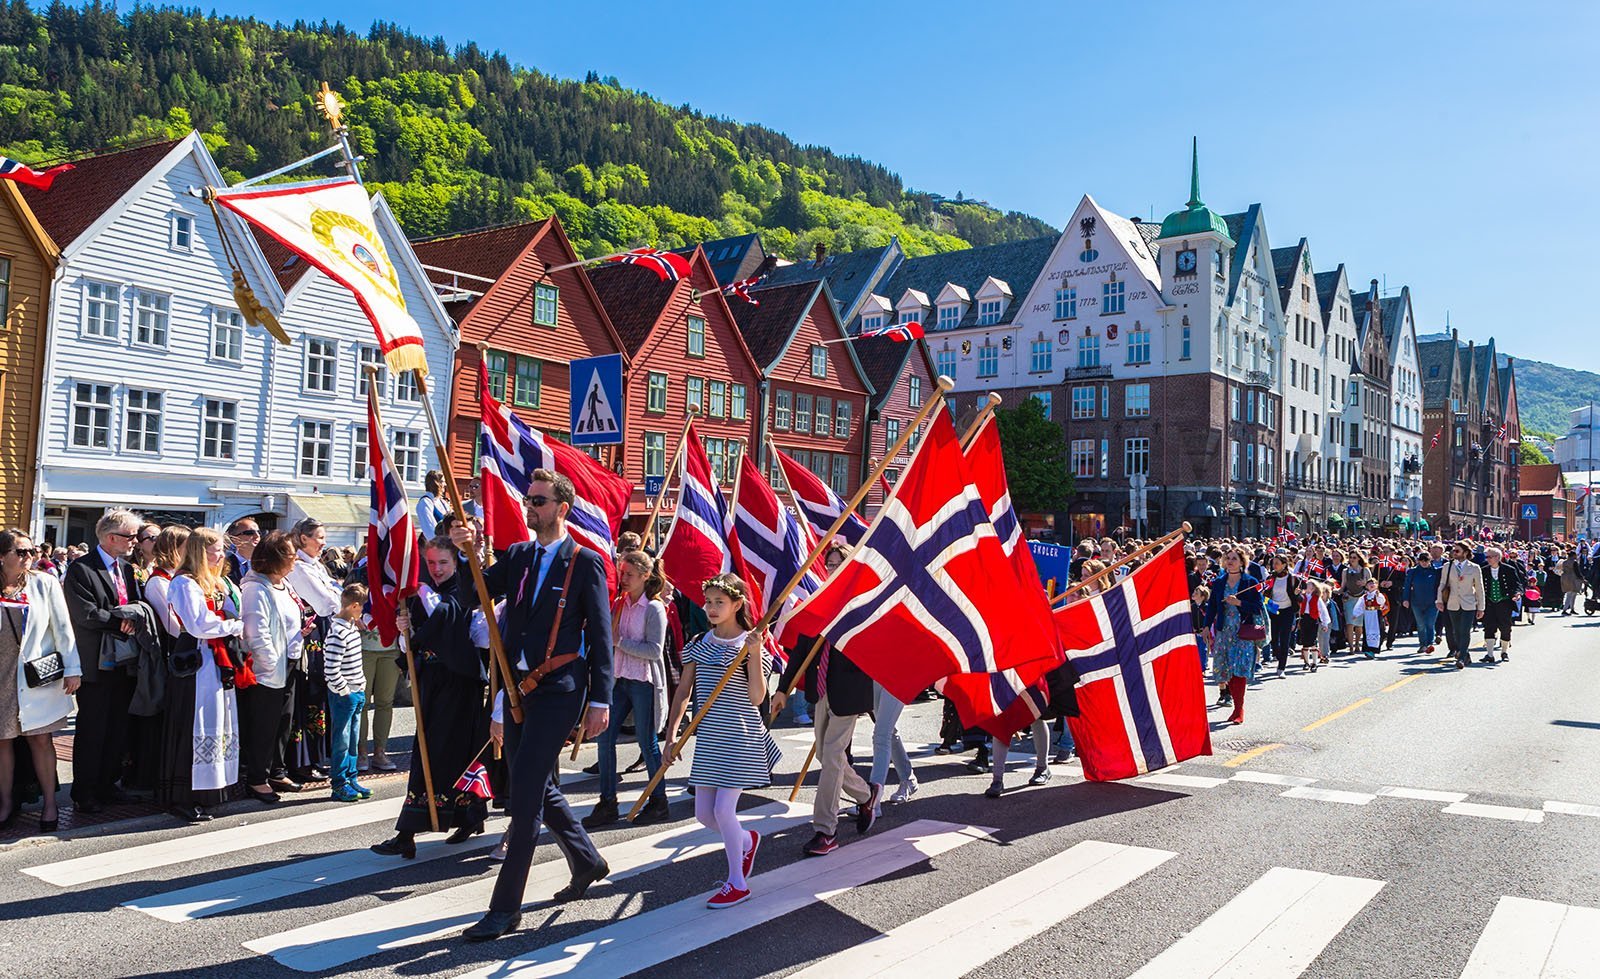 Everyday life in Norway. Marius Dobilas / Shutterstock.com.